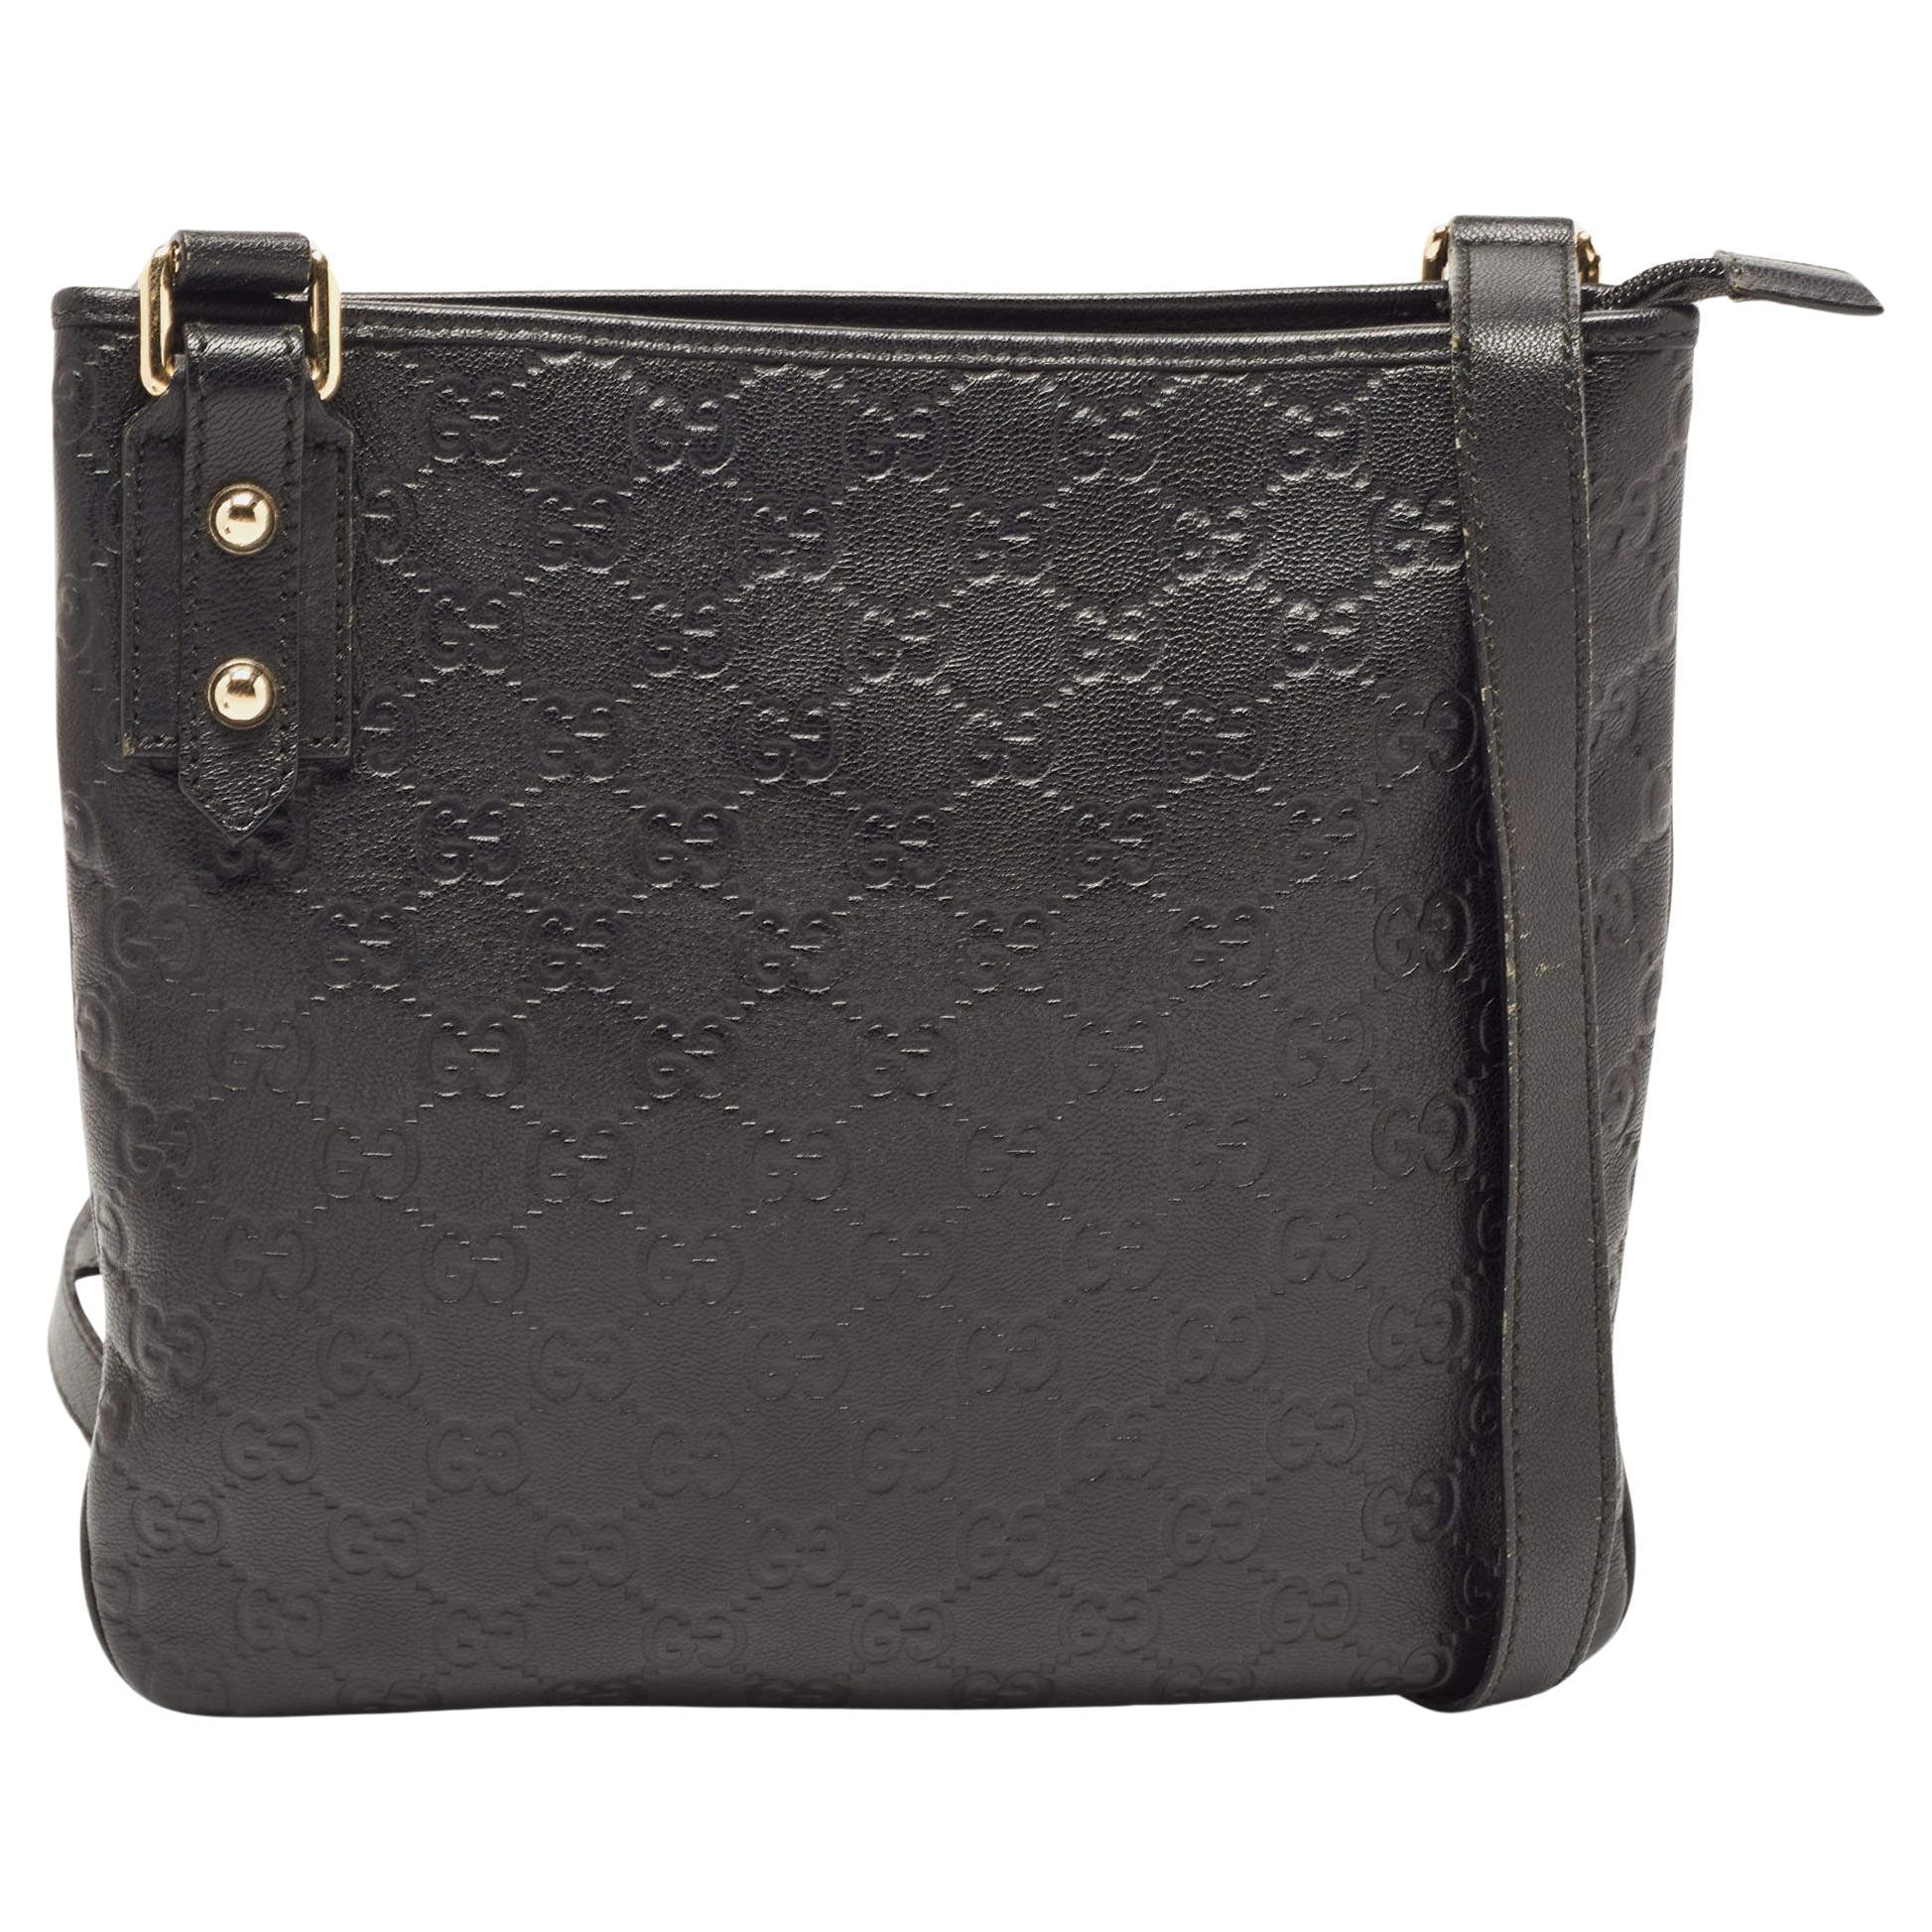 Gucci Black Guccissima Leather Messenger Bag For Sale